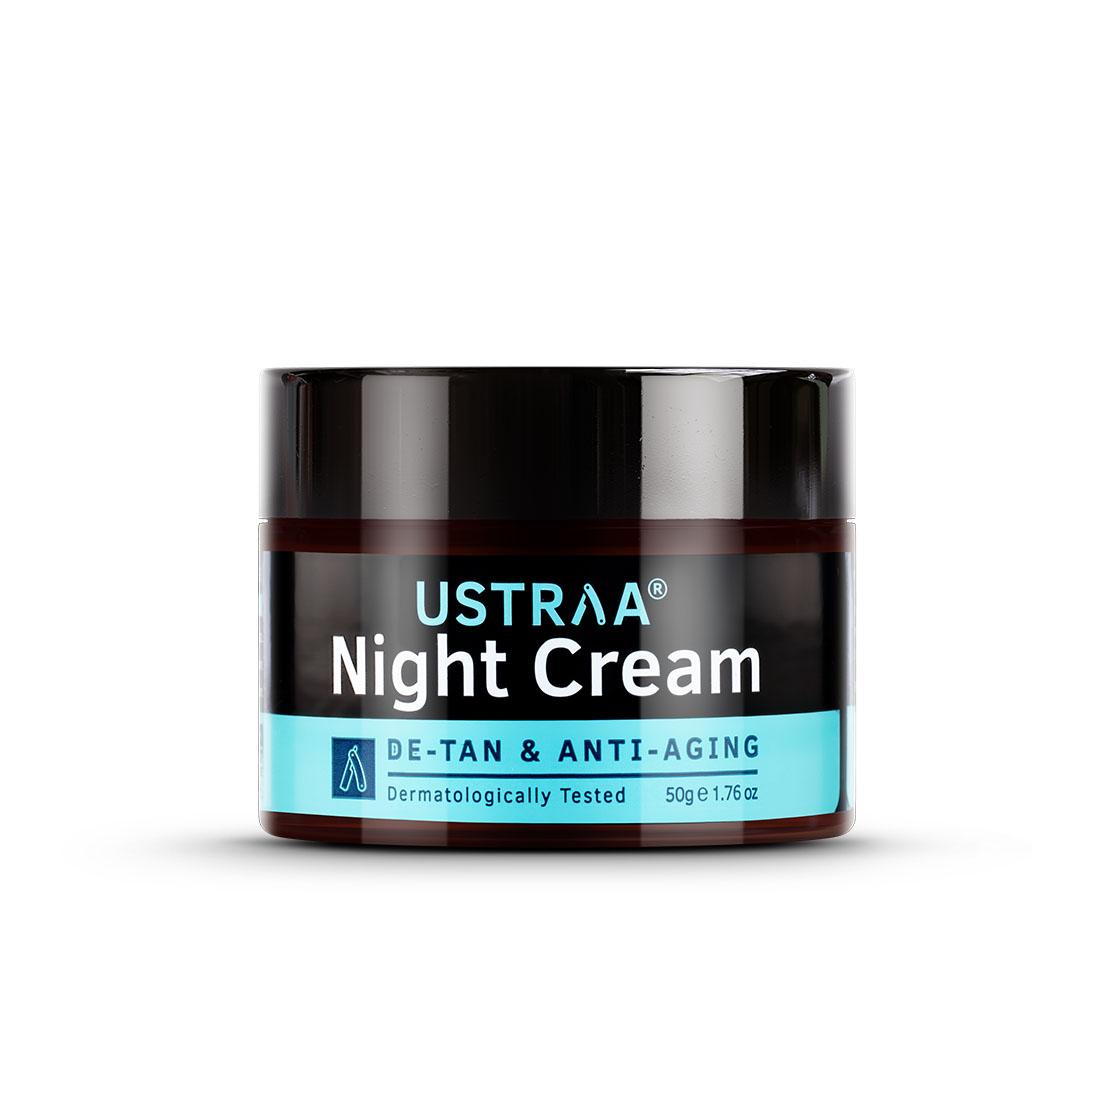 Ustraa Night Cream For Men: With De-Tan & Anti-Aging Properties